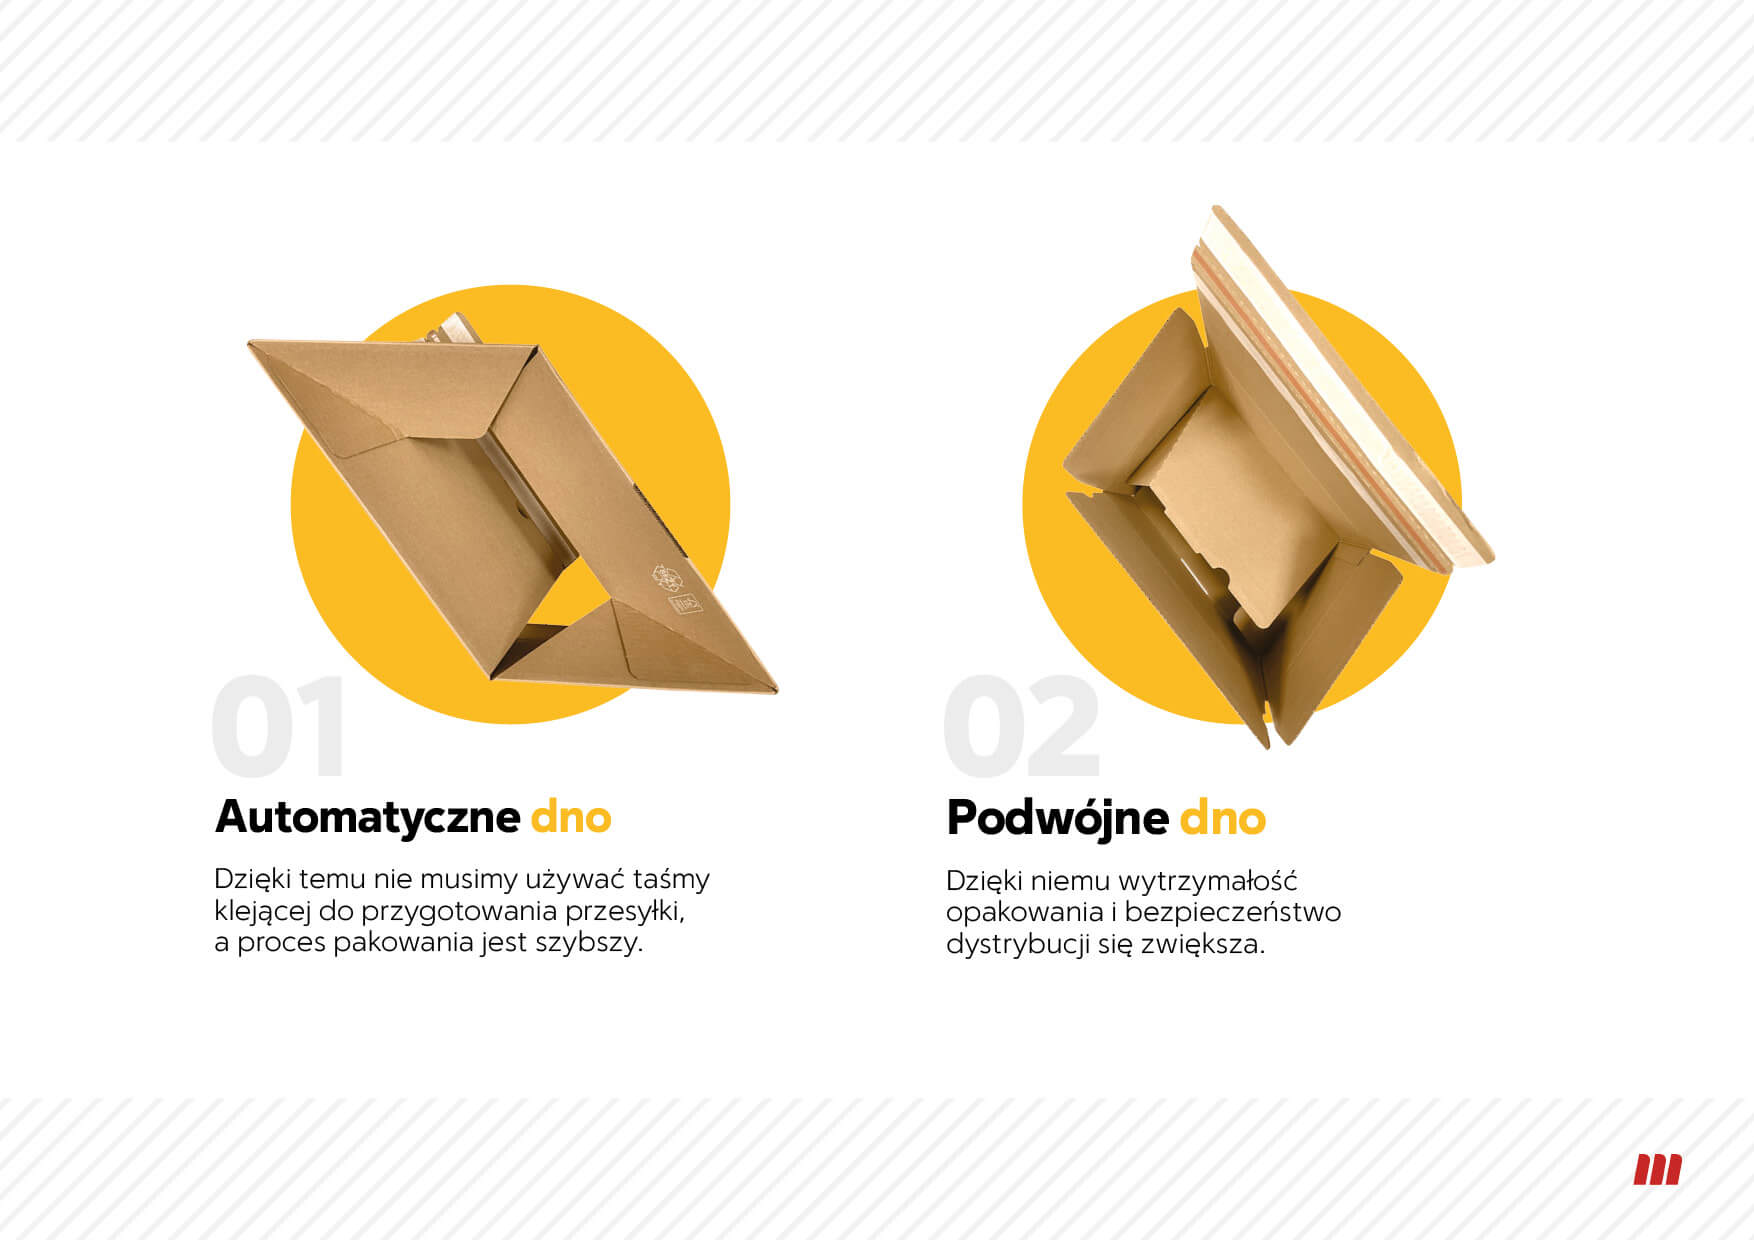 Pudełka wysyłkowe (Send Boxes) – opakowania dla e-commerce